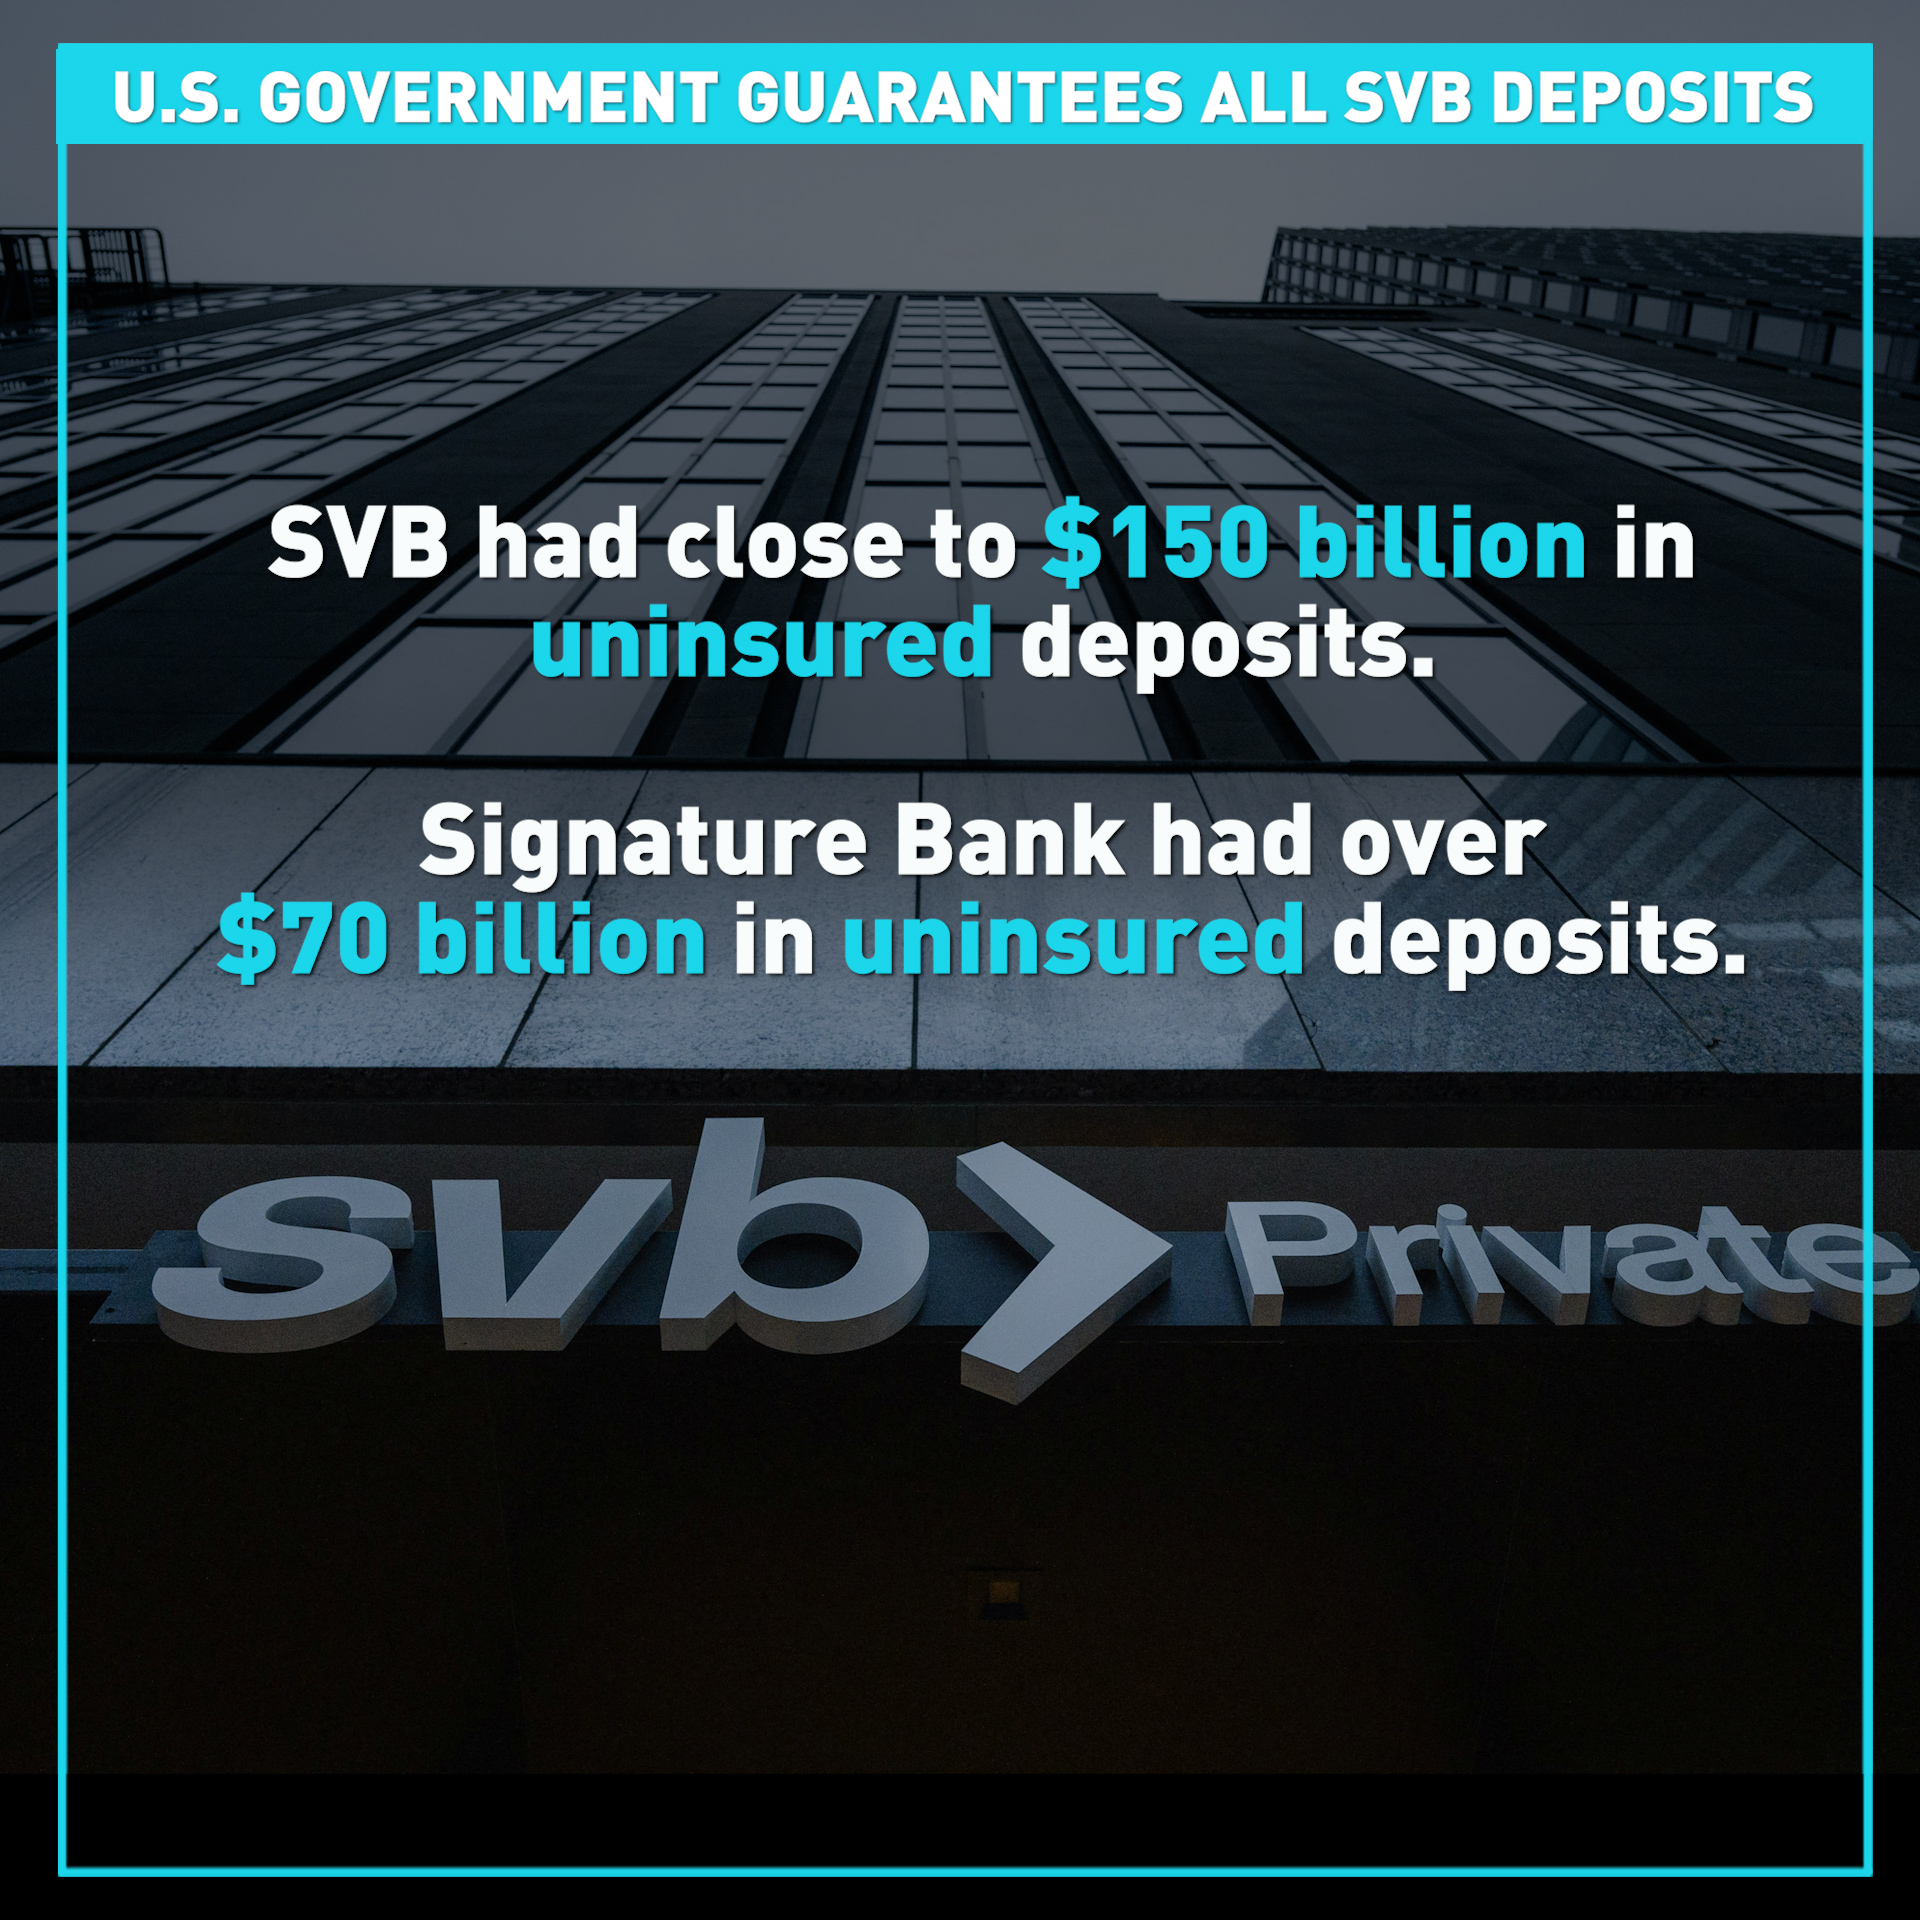 U.S. government guarantees all SVB and Signature Bank deposits 